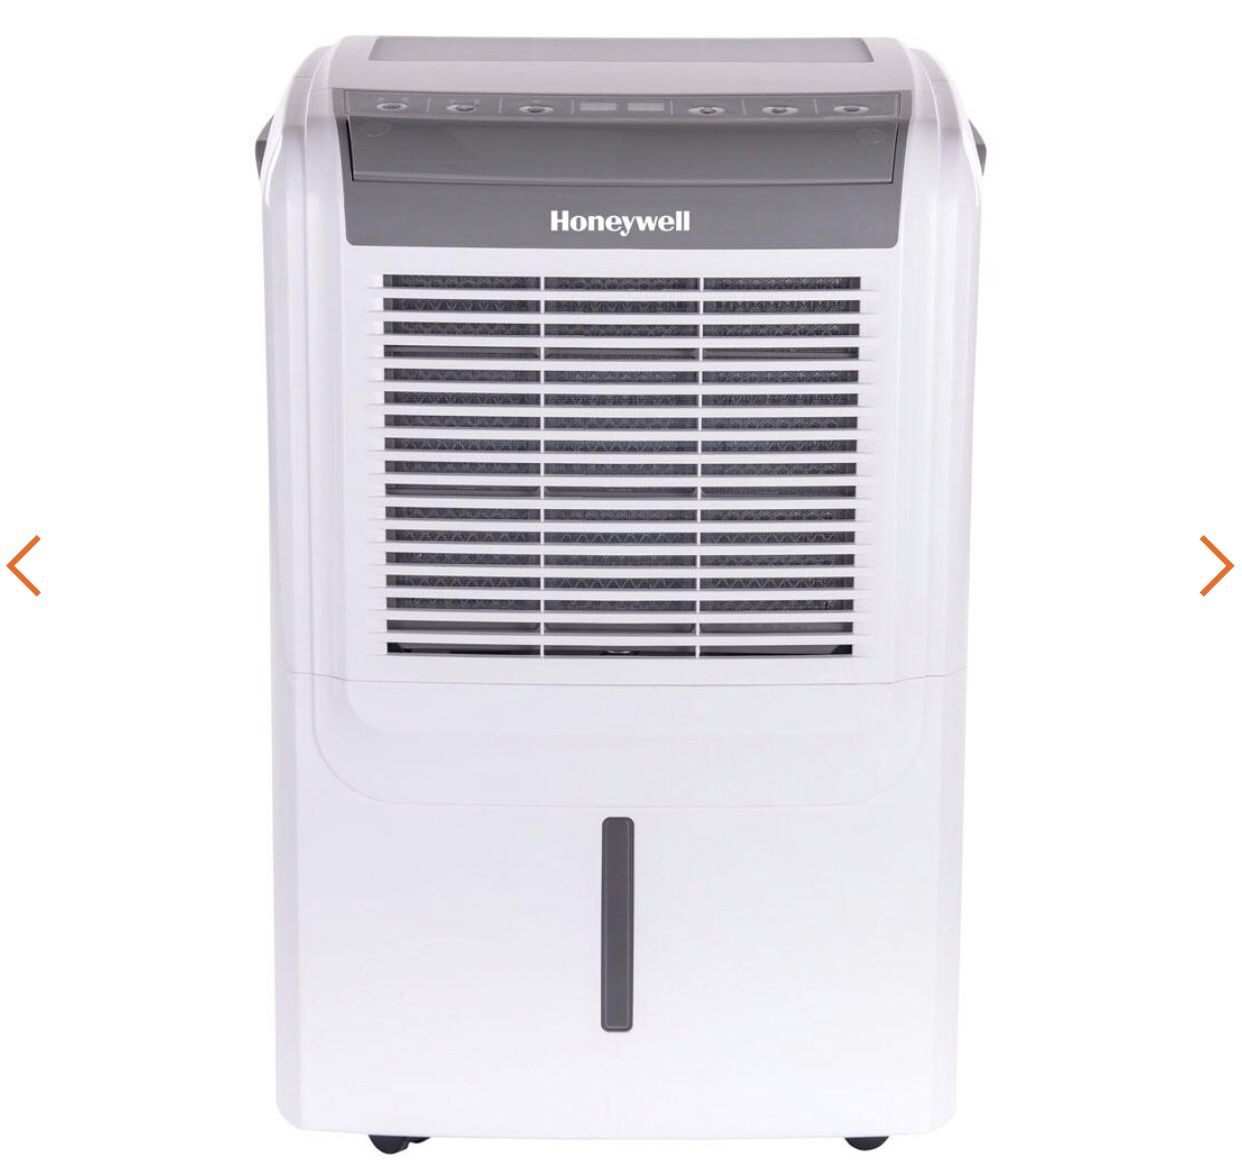 Honeywell 70-Pint ENERGY STAR Dehumidifier- NEW IN BOX